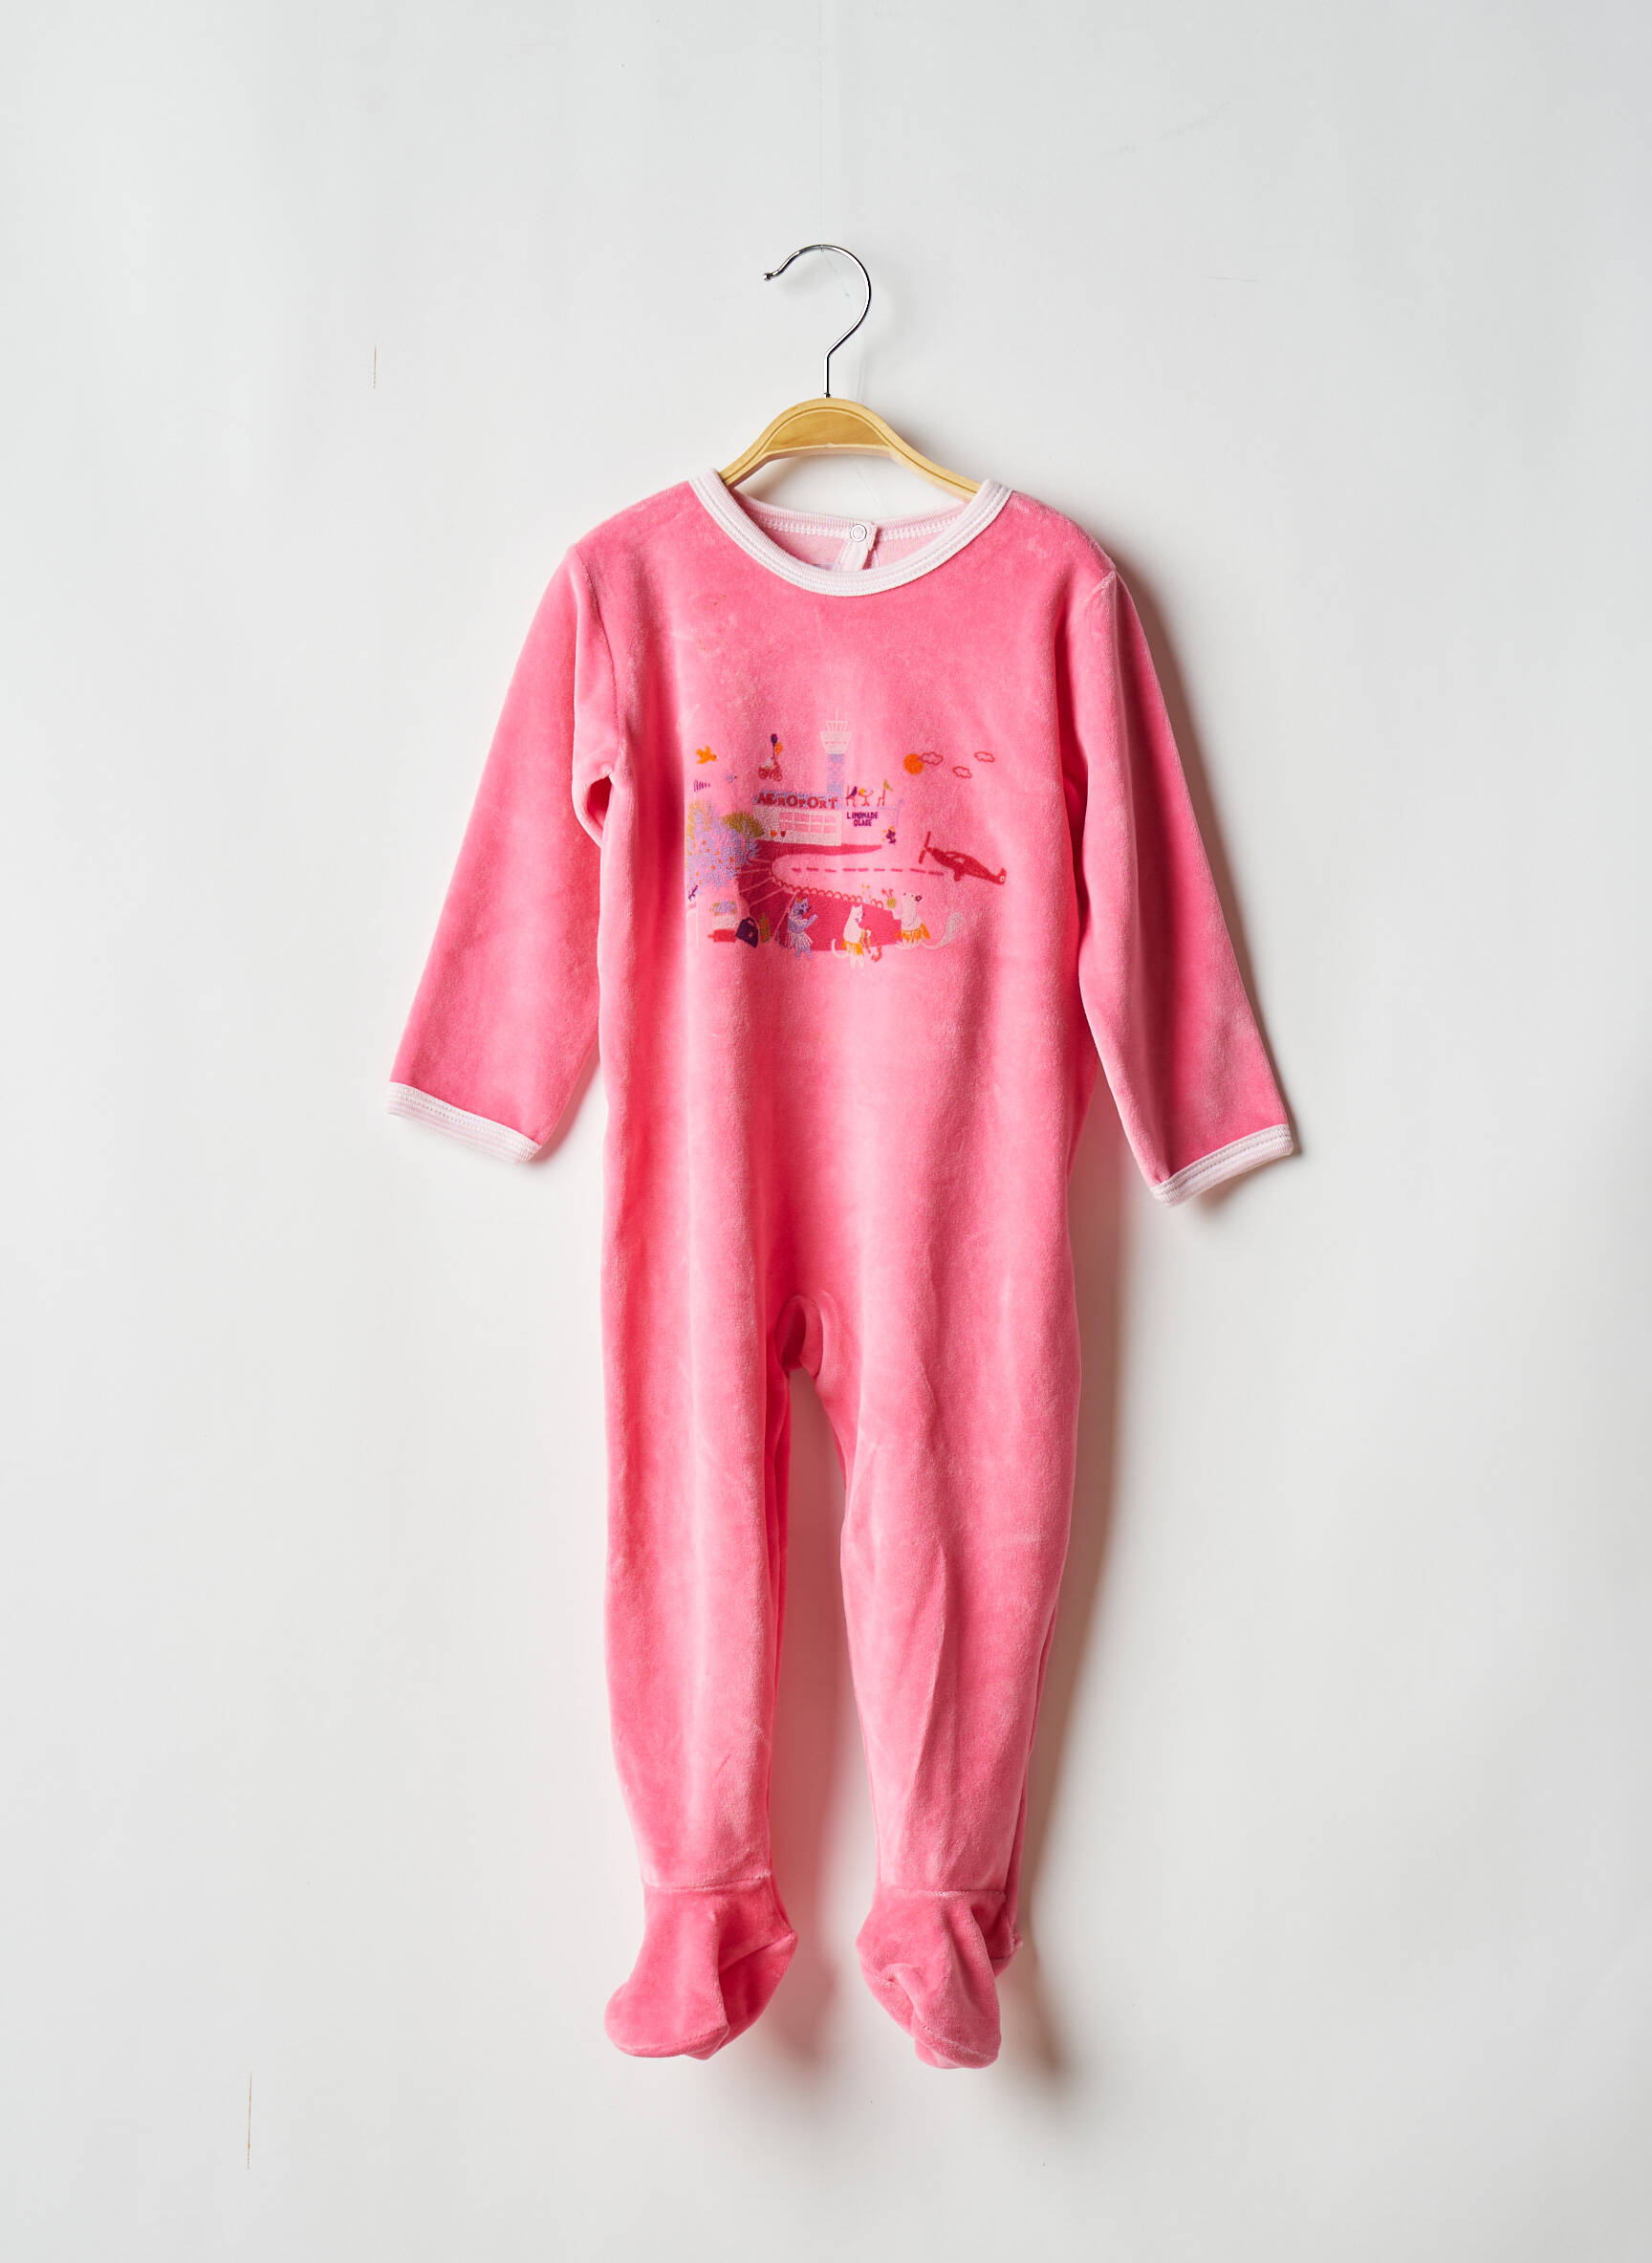 Petit Bateau Pyjamas 1 Fille De Couleur Rose 2237189-rose00 - Modz